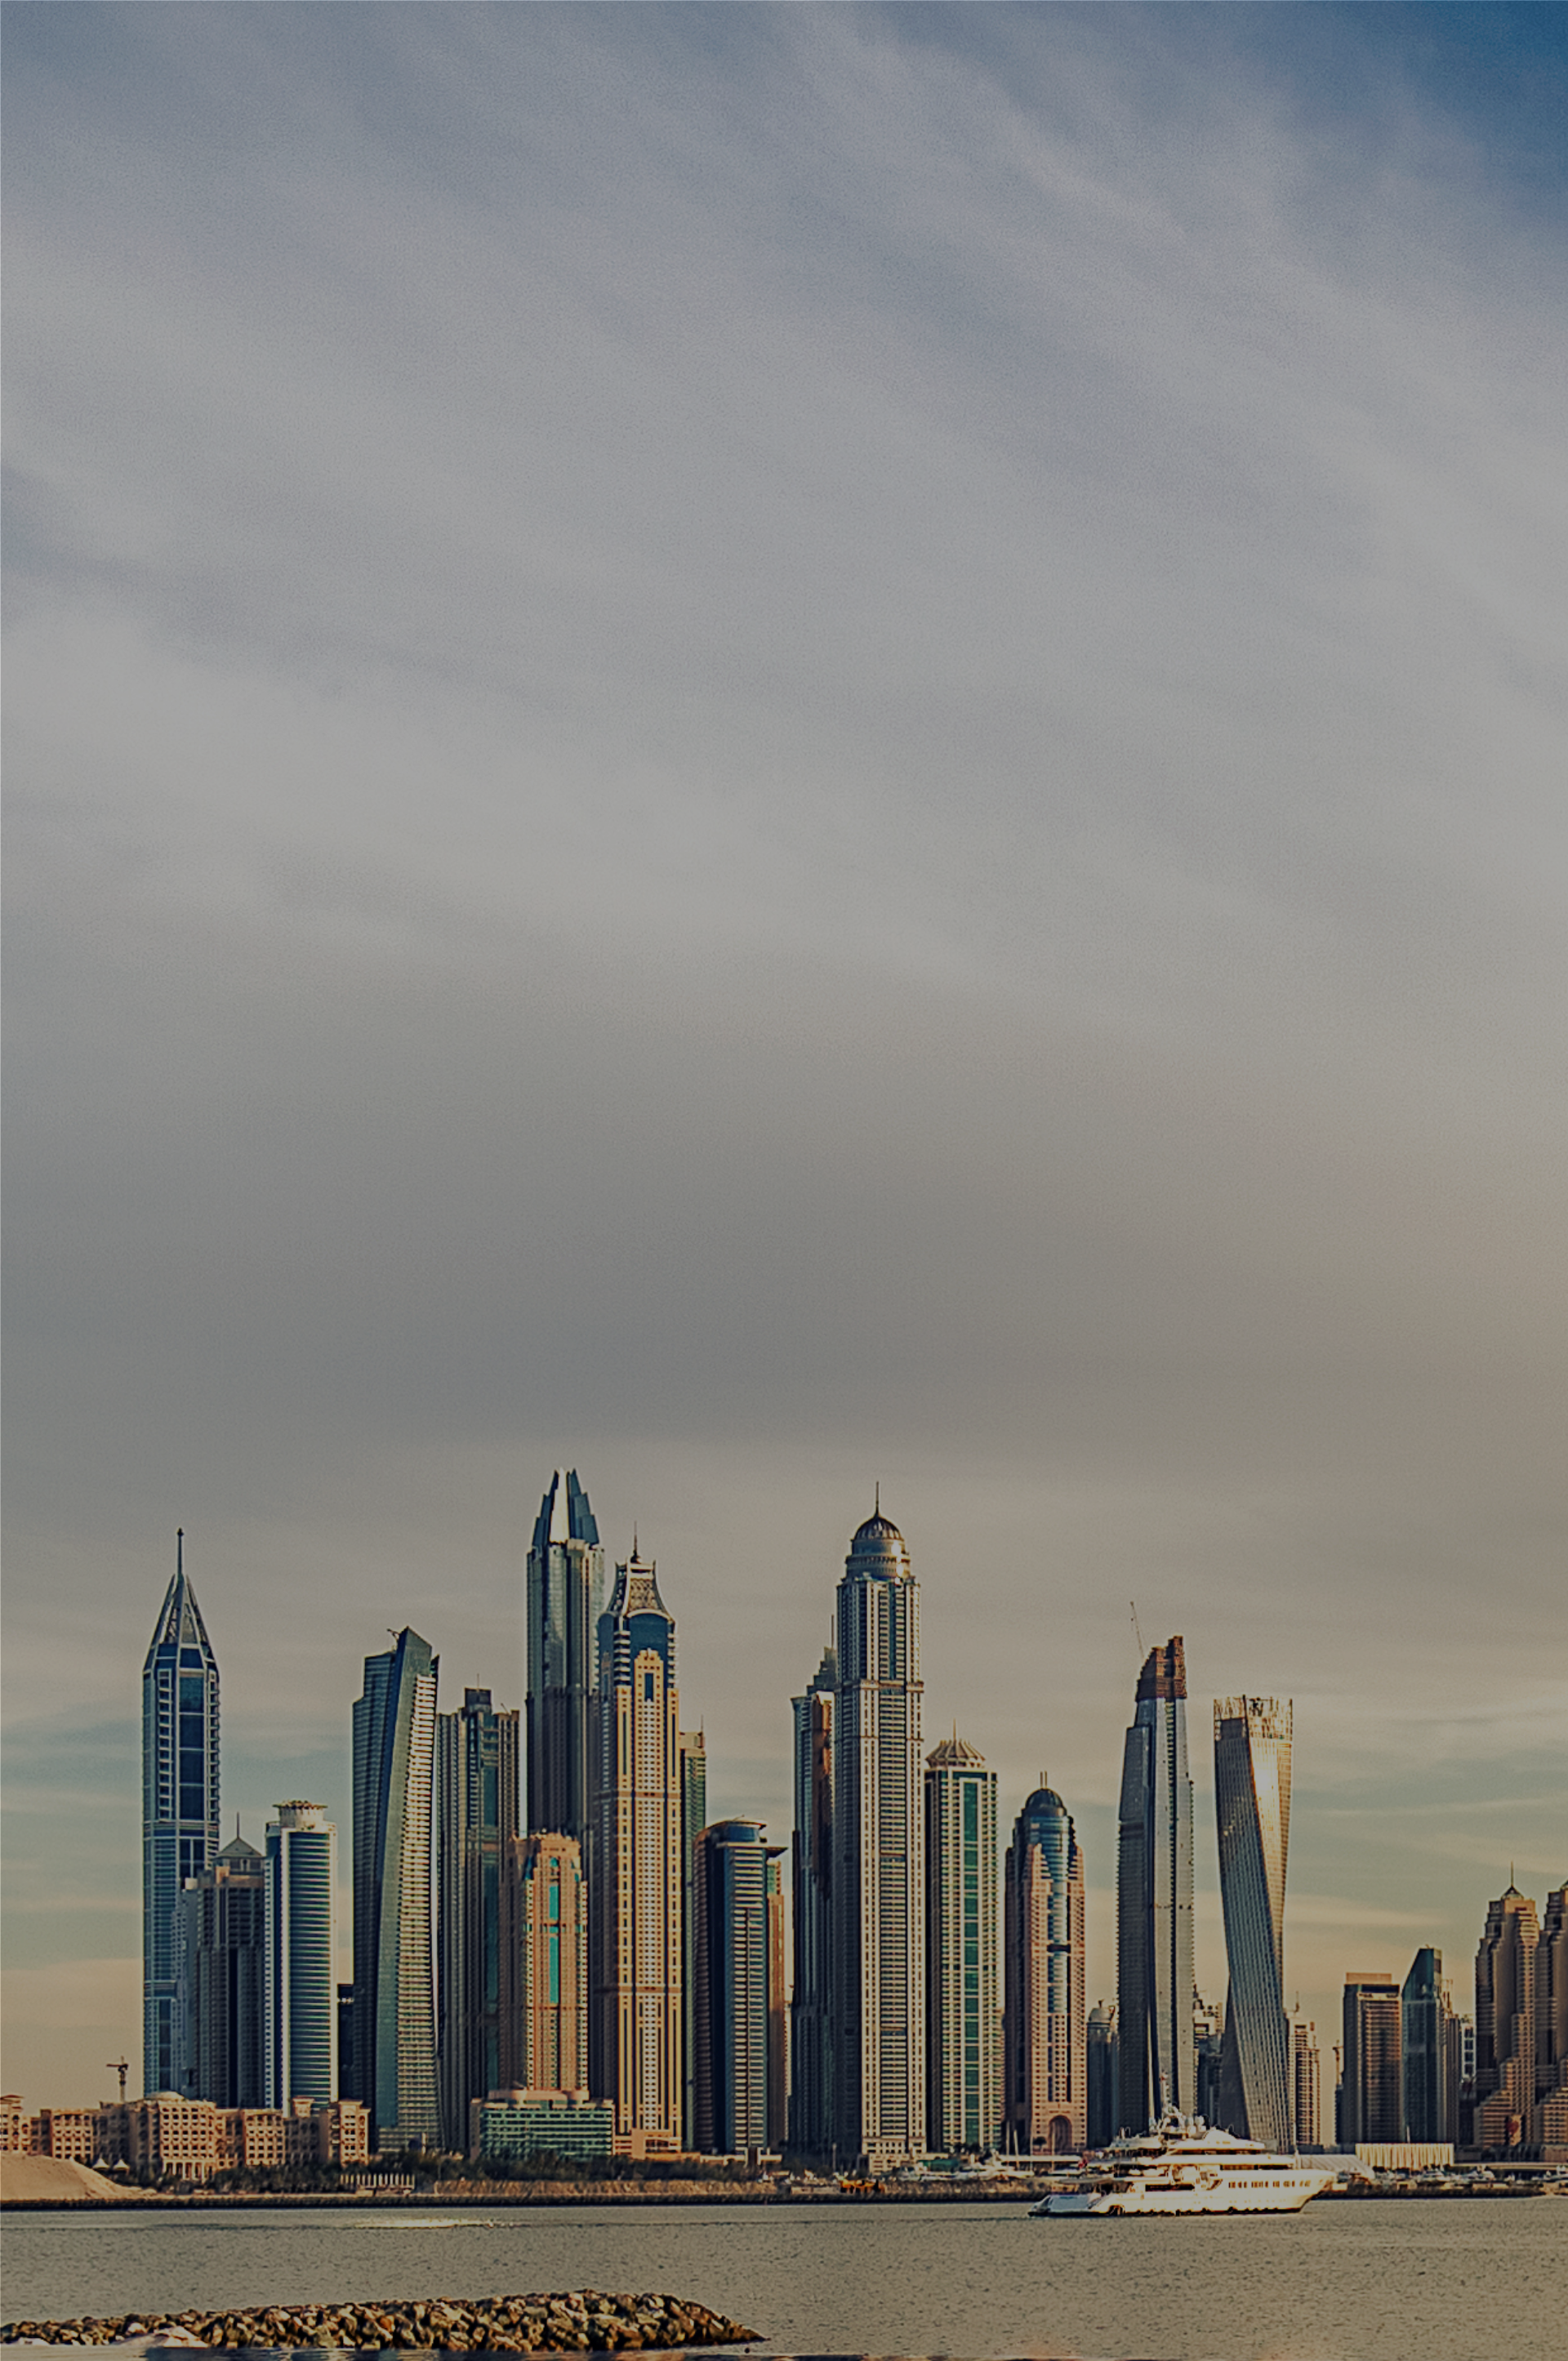 LIV Luxury Residency in Dubai